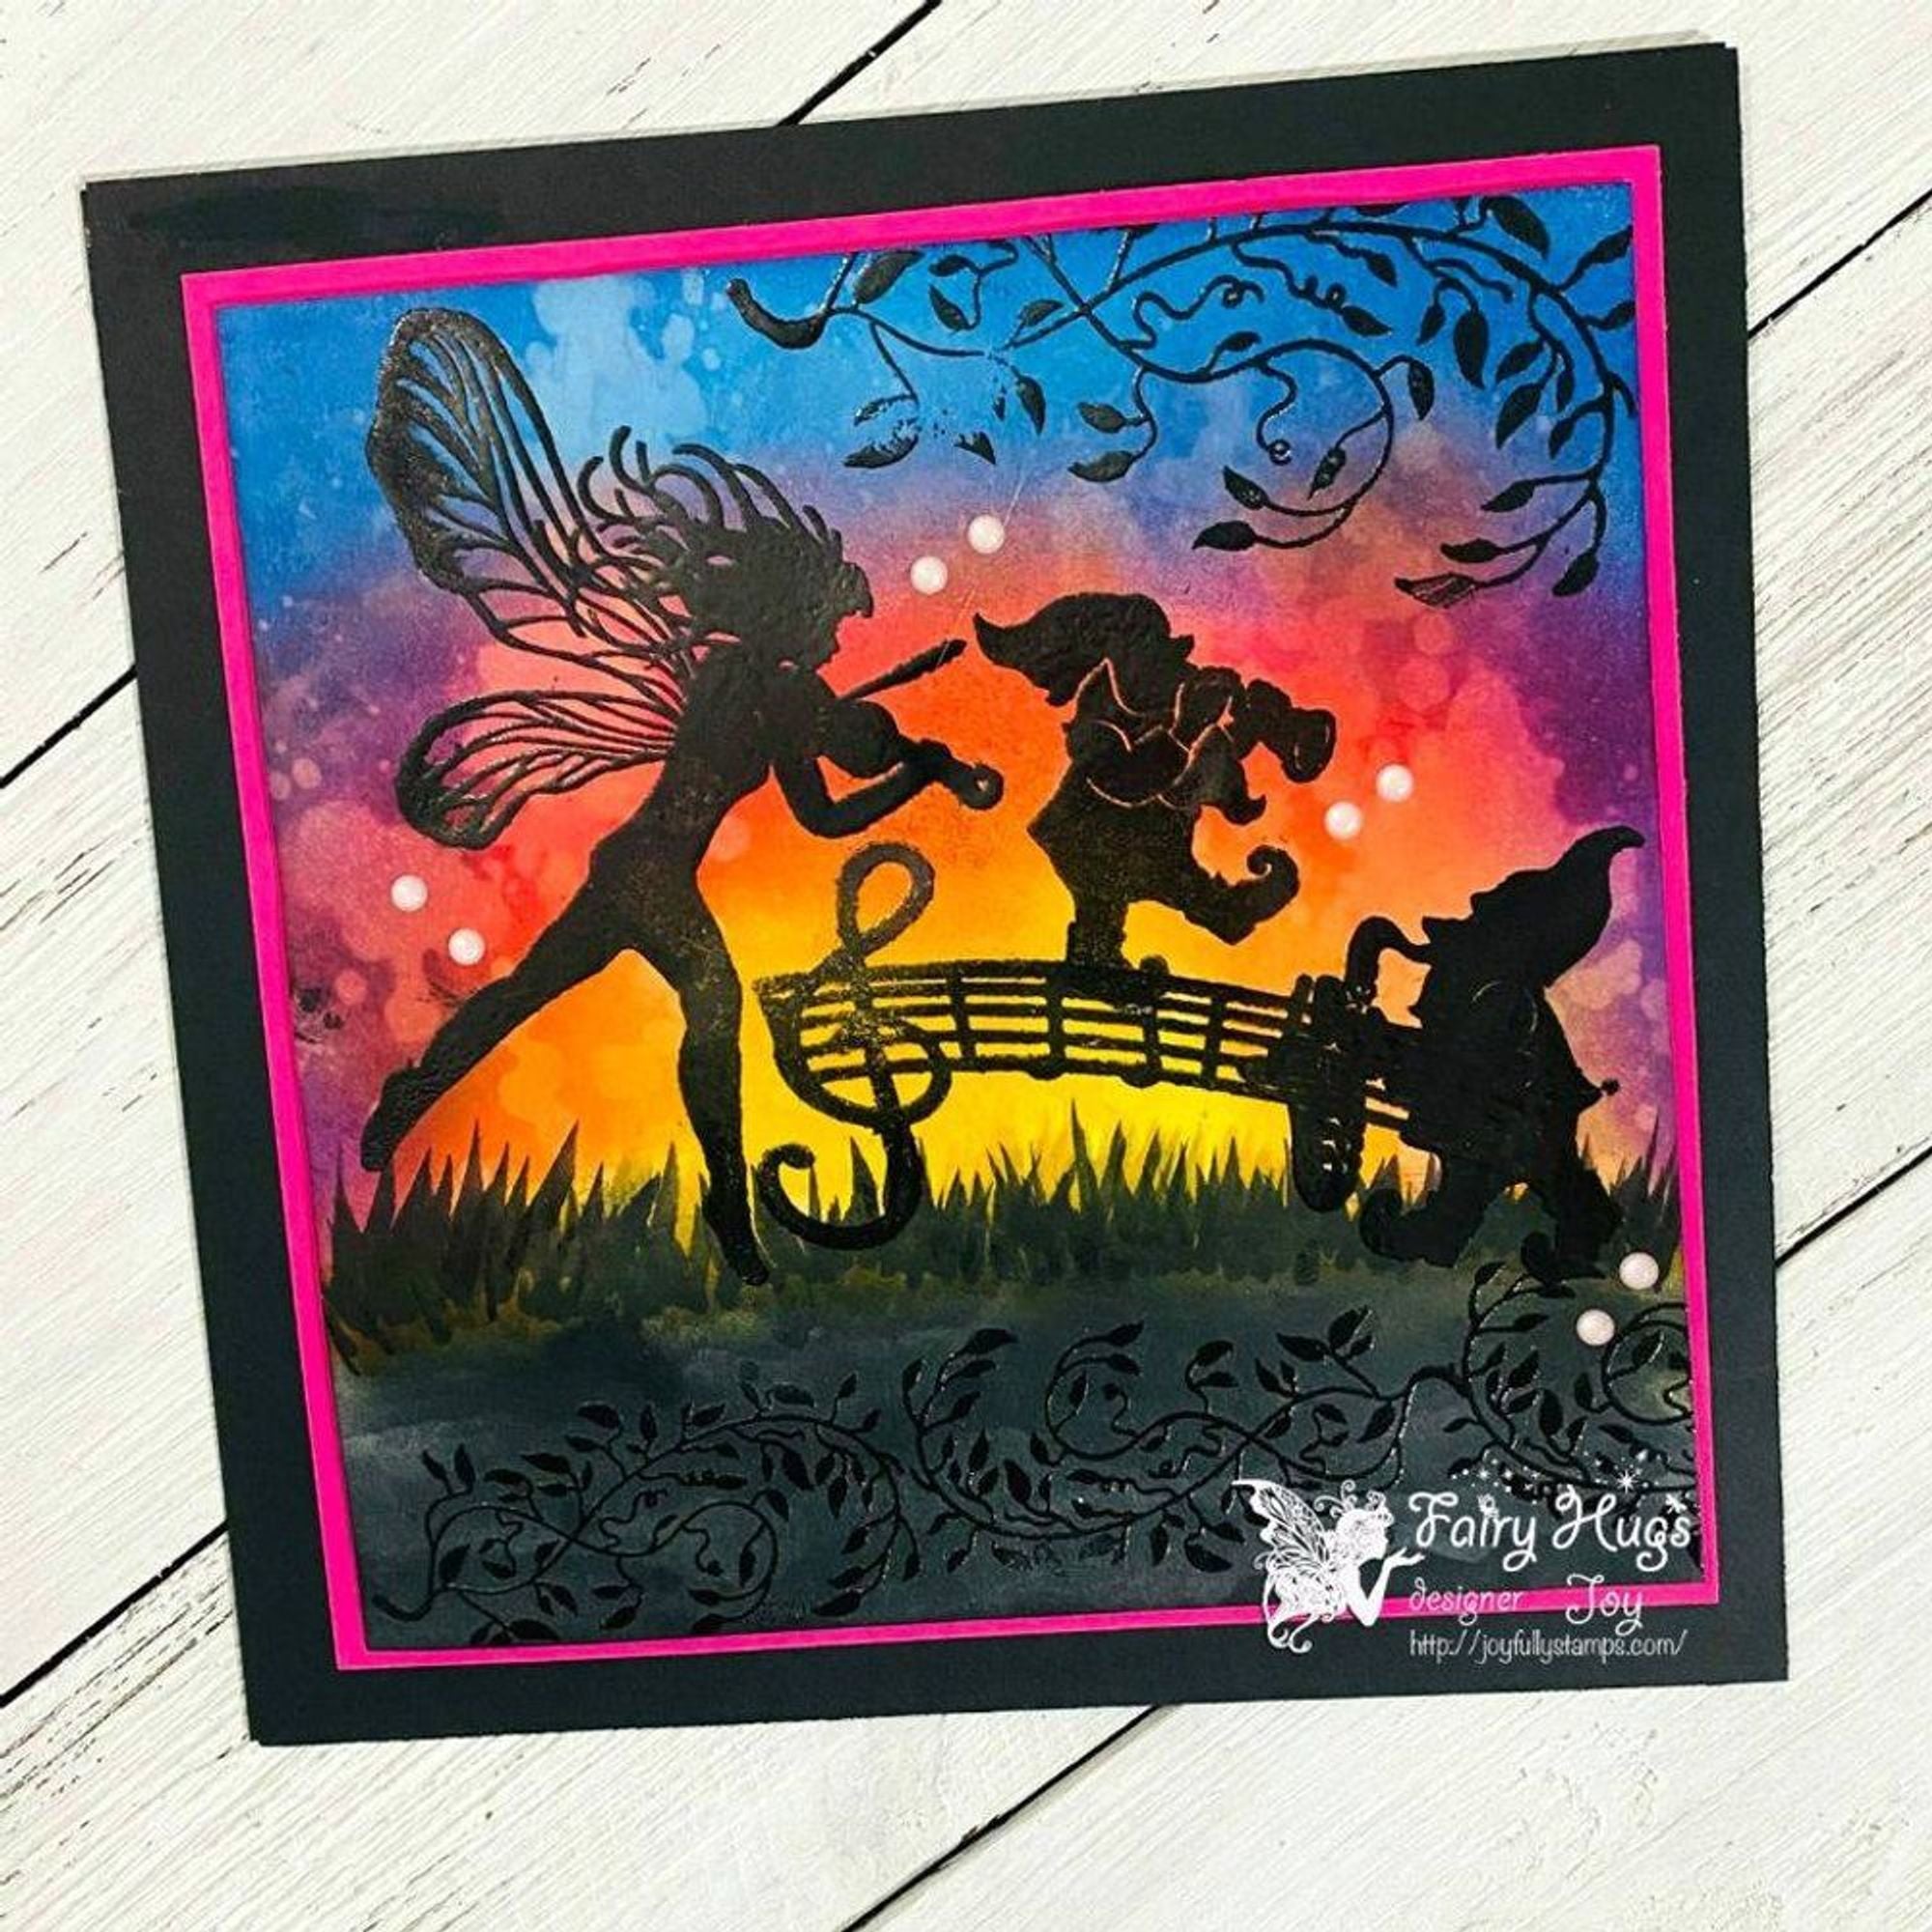 Fairy Hugs Stamps - Corwain